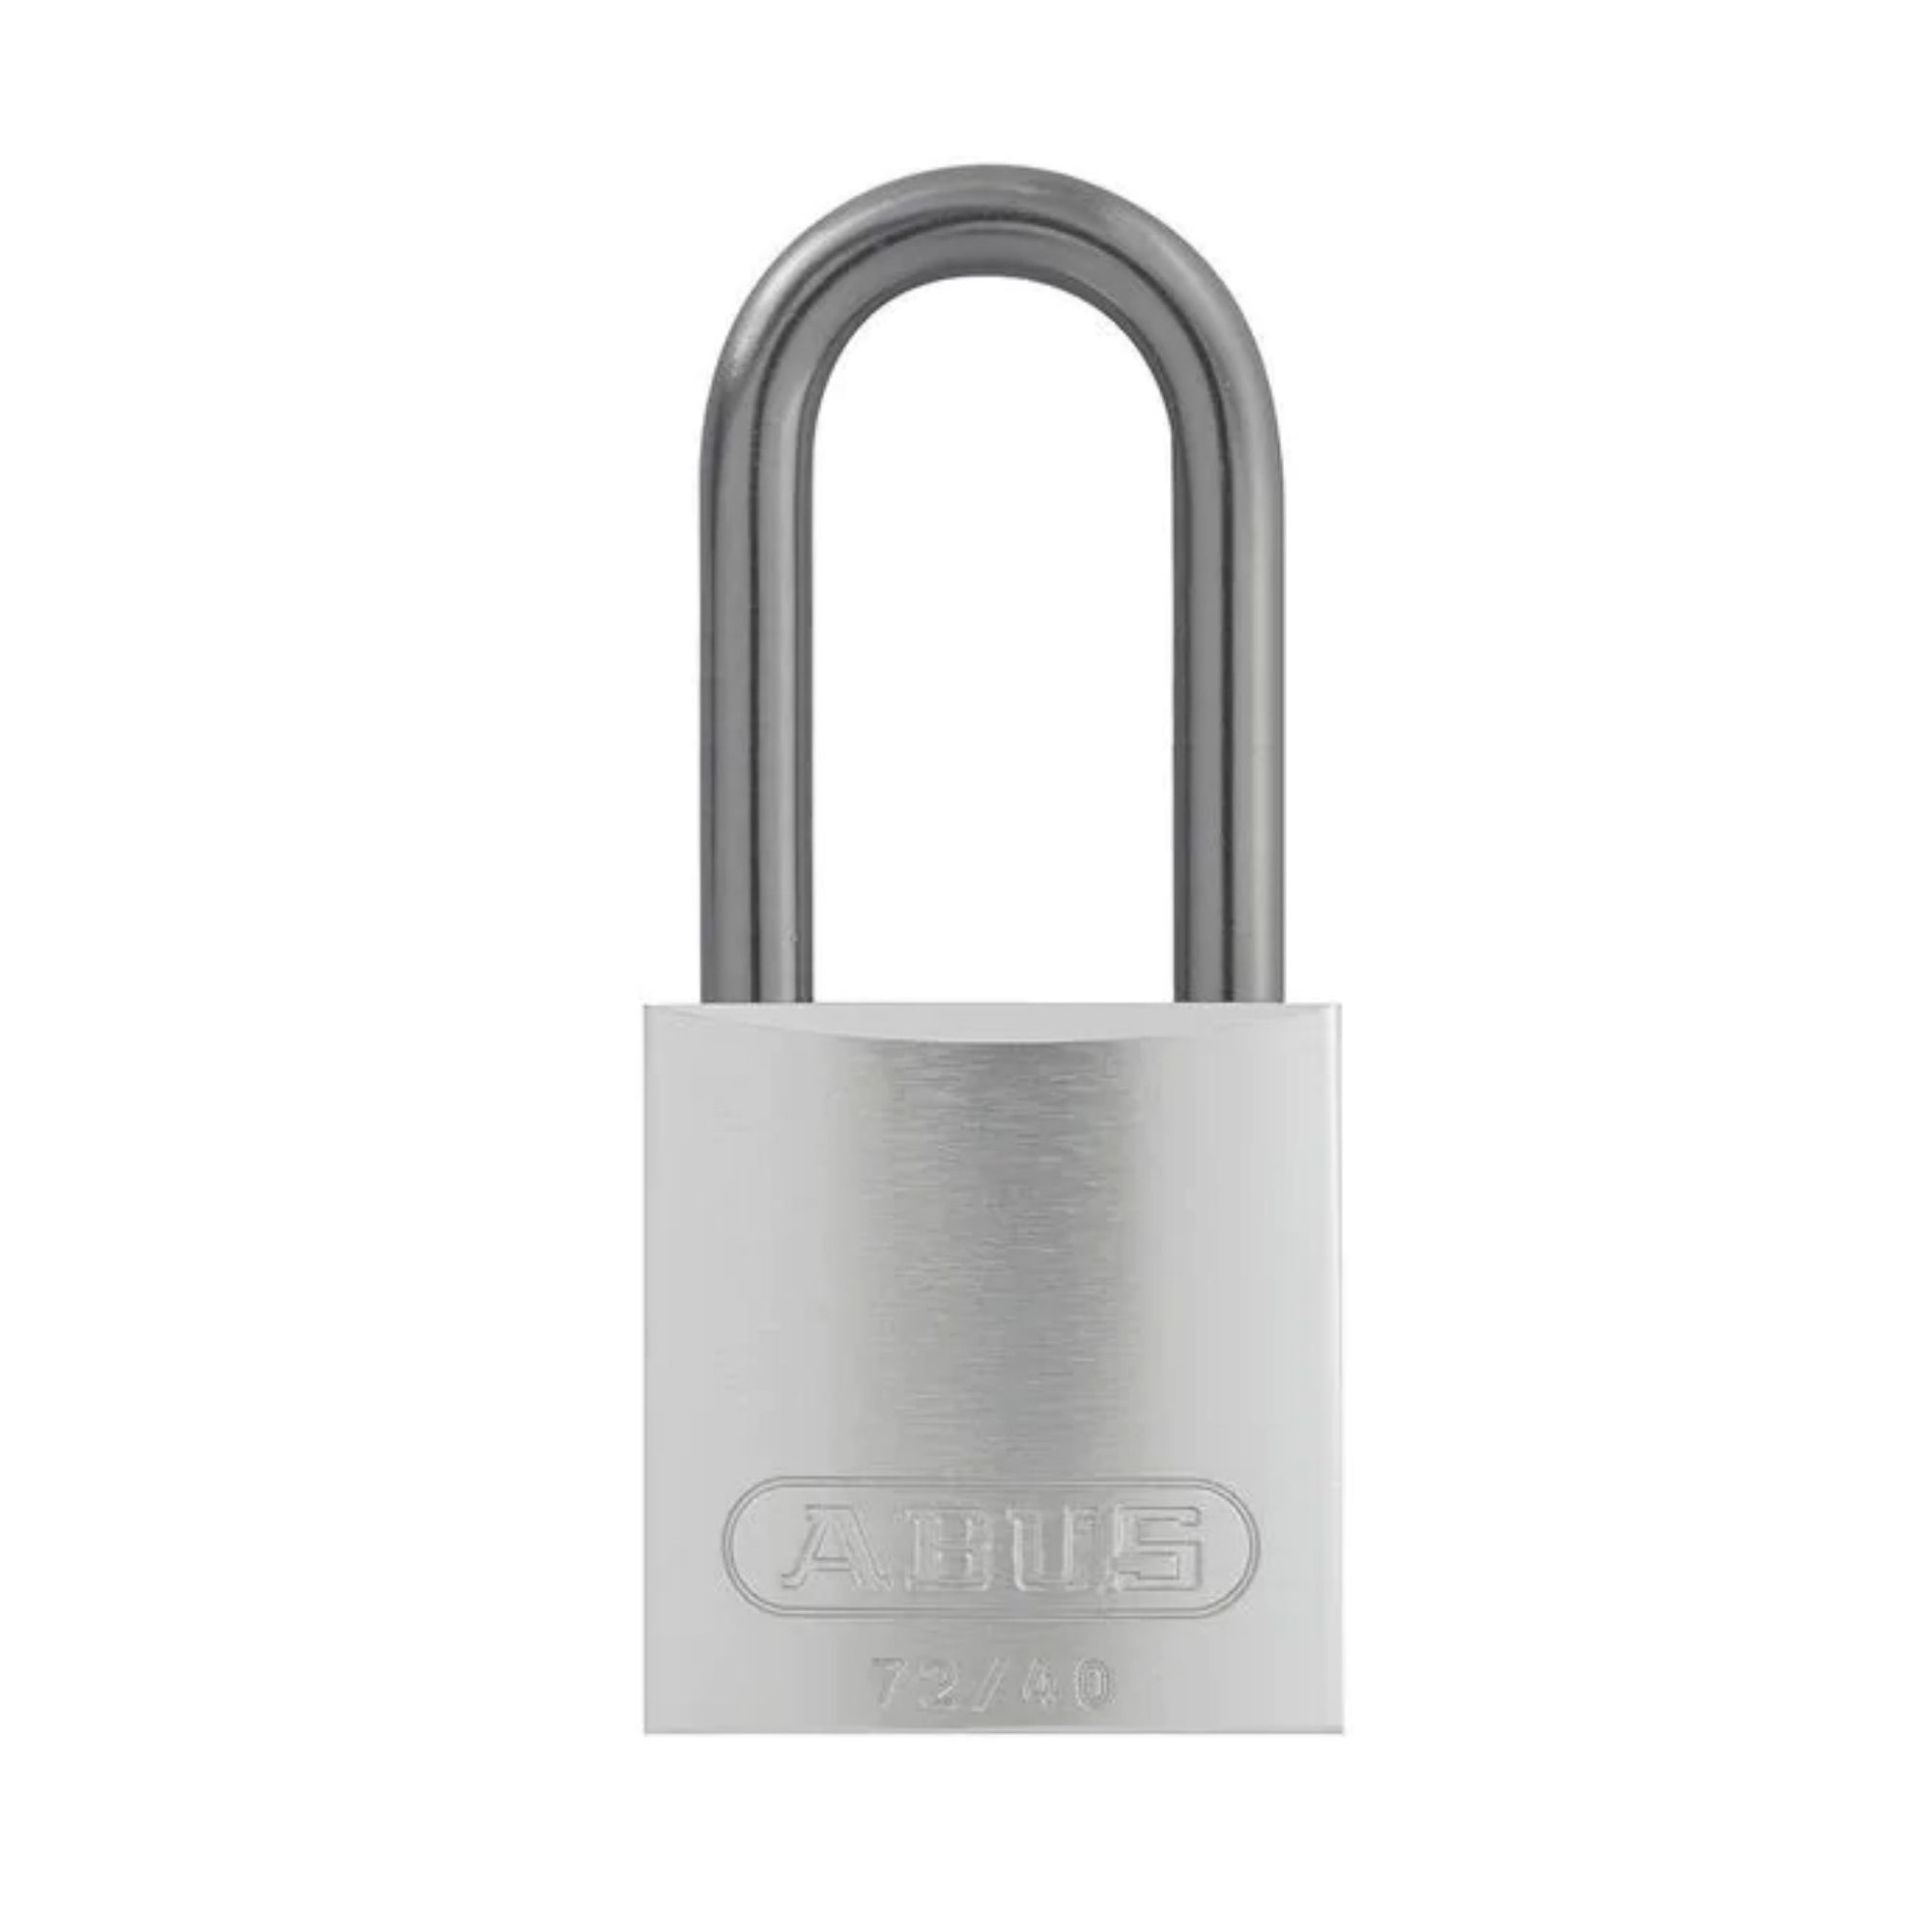 Abus 72/40HB40 KA TT00036 Silver Titalium Safety Padlock with 1-1/2" Shackle, Keyed Alike to Match Existing Key Number KATT00036 - The Lock Source